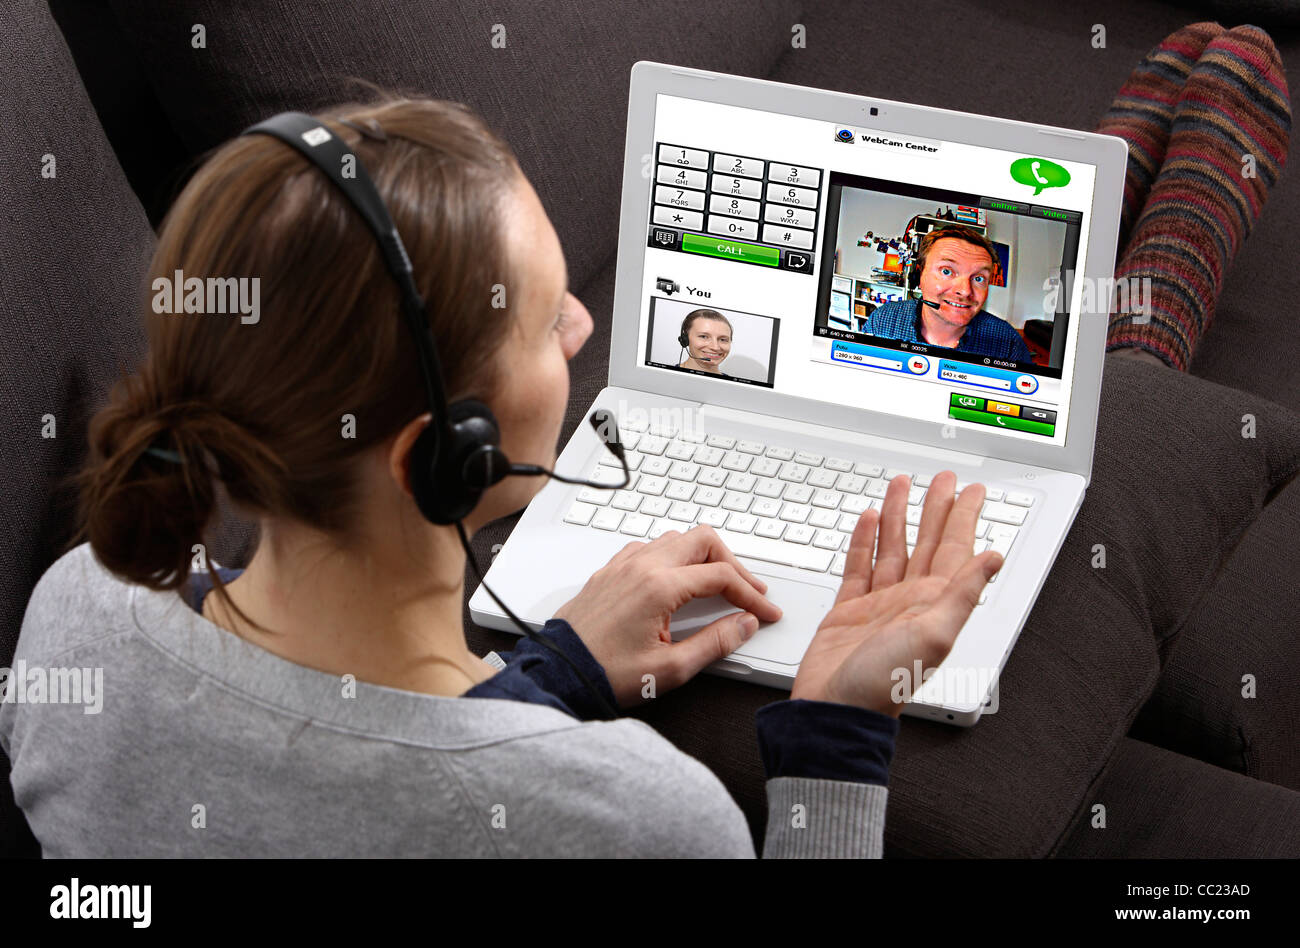 Online chat with webcam El Monte
